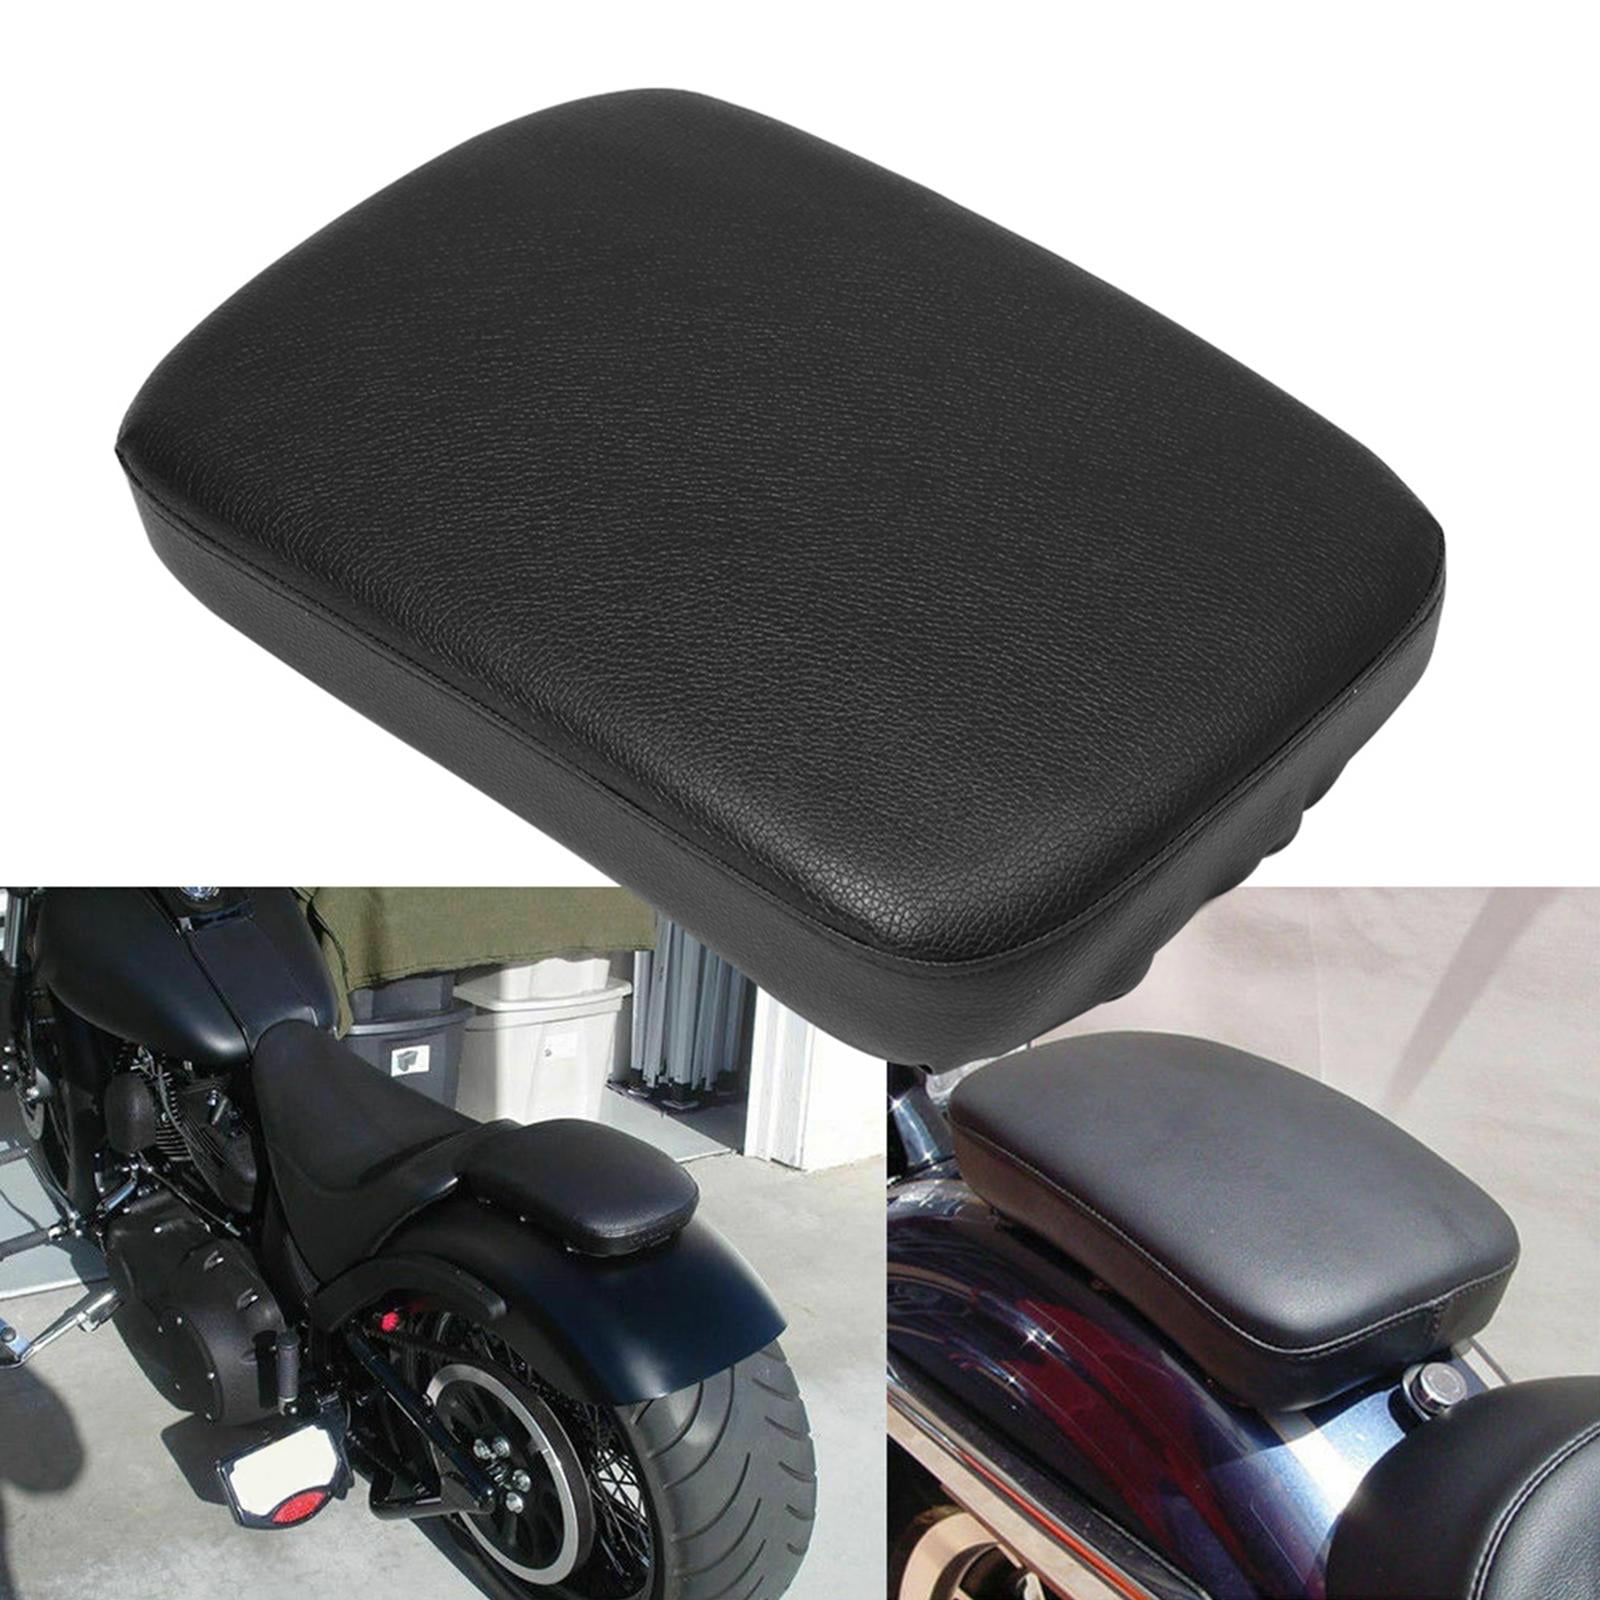 Rear Motorcycle Seat Cushion Passenger Pad Stops Hot Seat Motorcycle Passenger Seat Pad Easy to Install. Cooling 3D Mesh Air Motorcycle Passenger Seat Cushion Pillion Pad Comfortable 